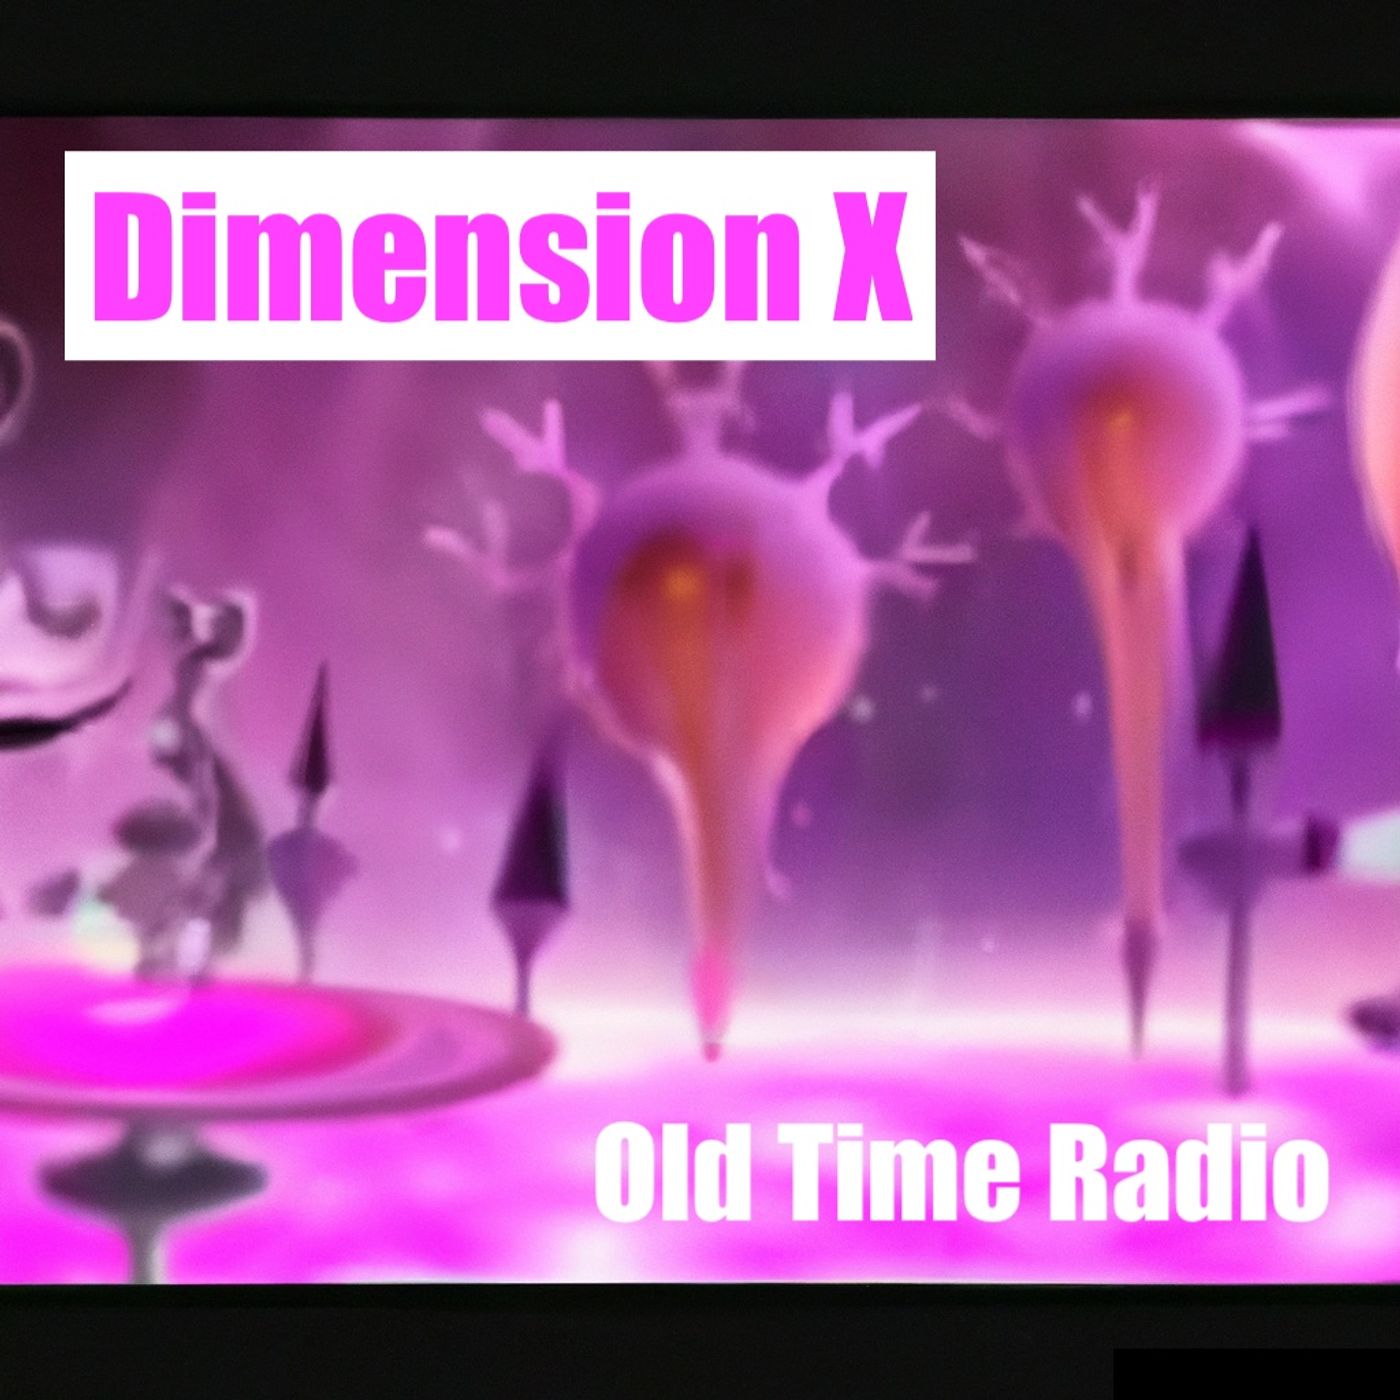 Dimension X radio  and here Will Come Soft  episode